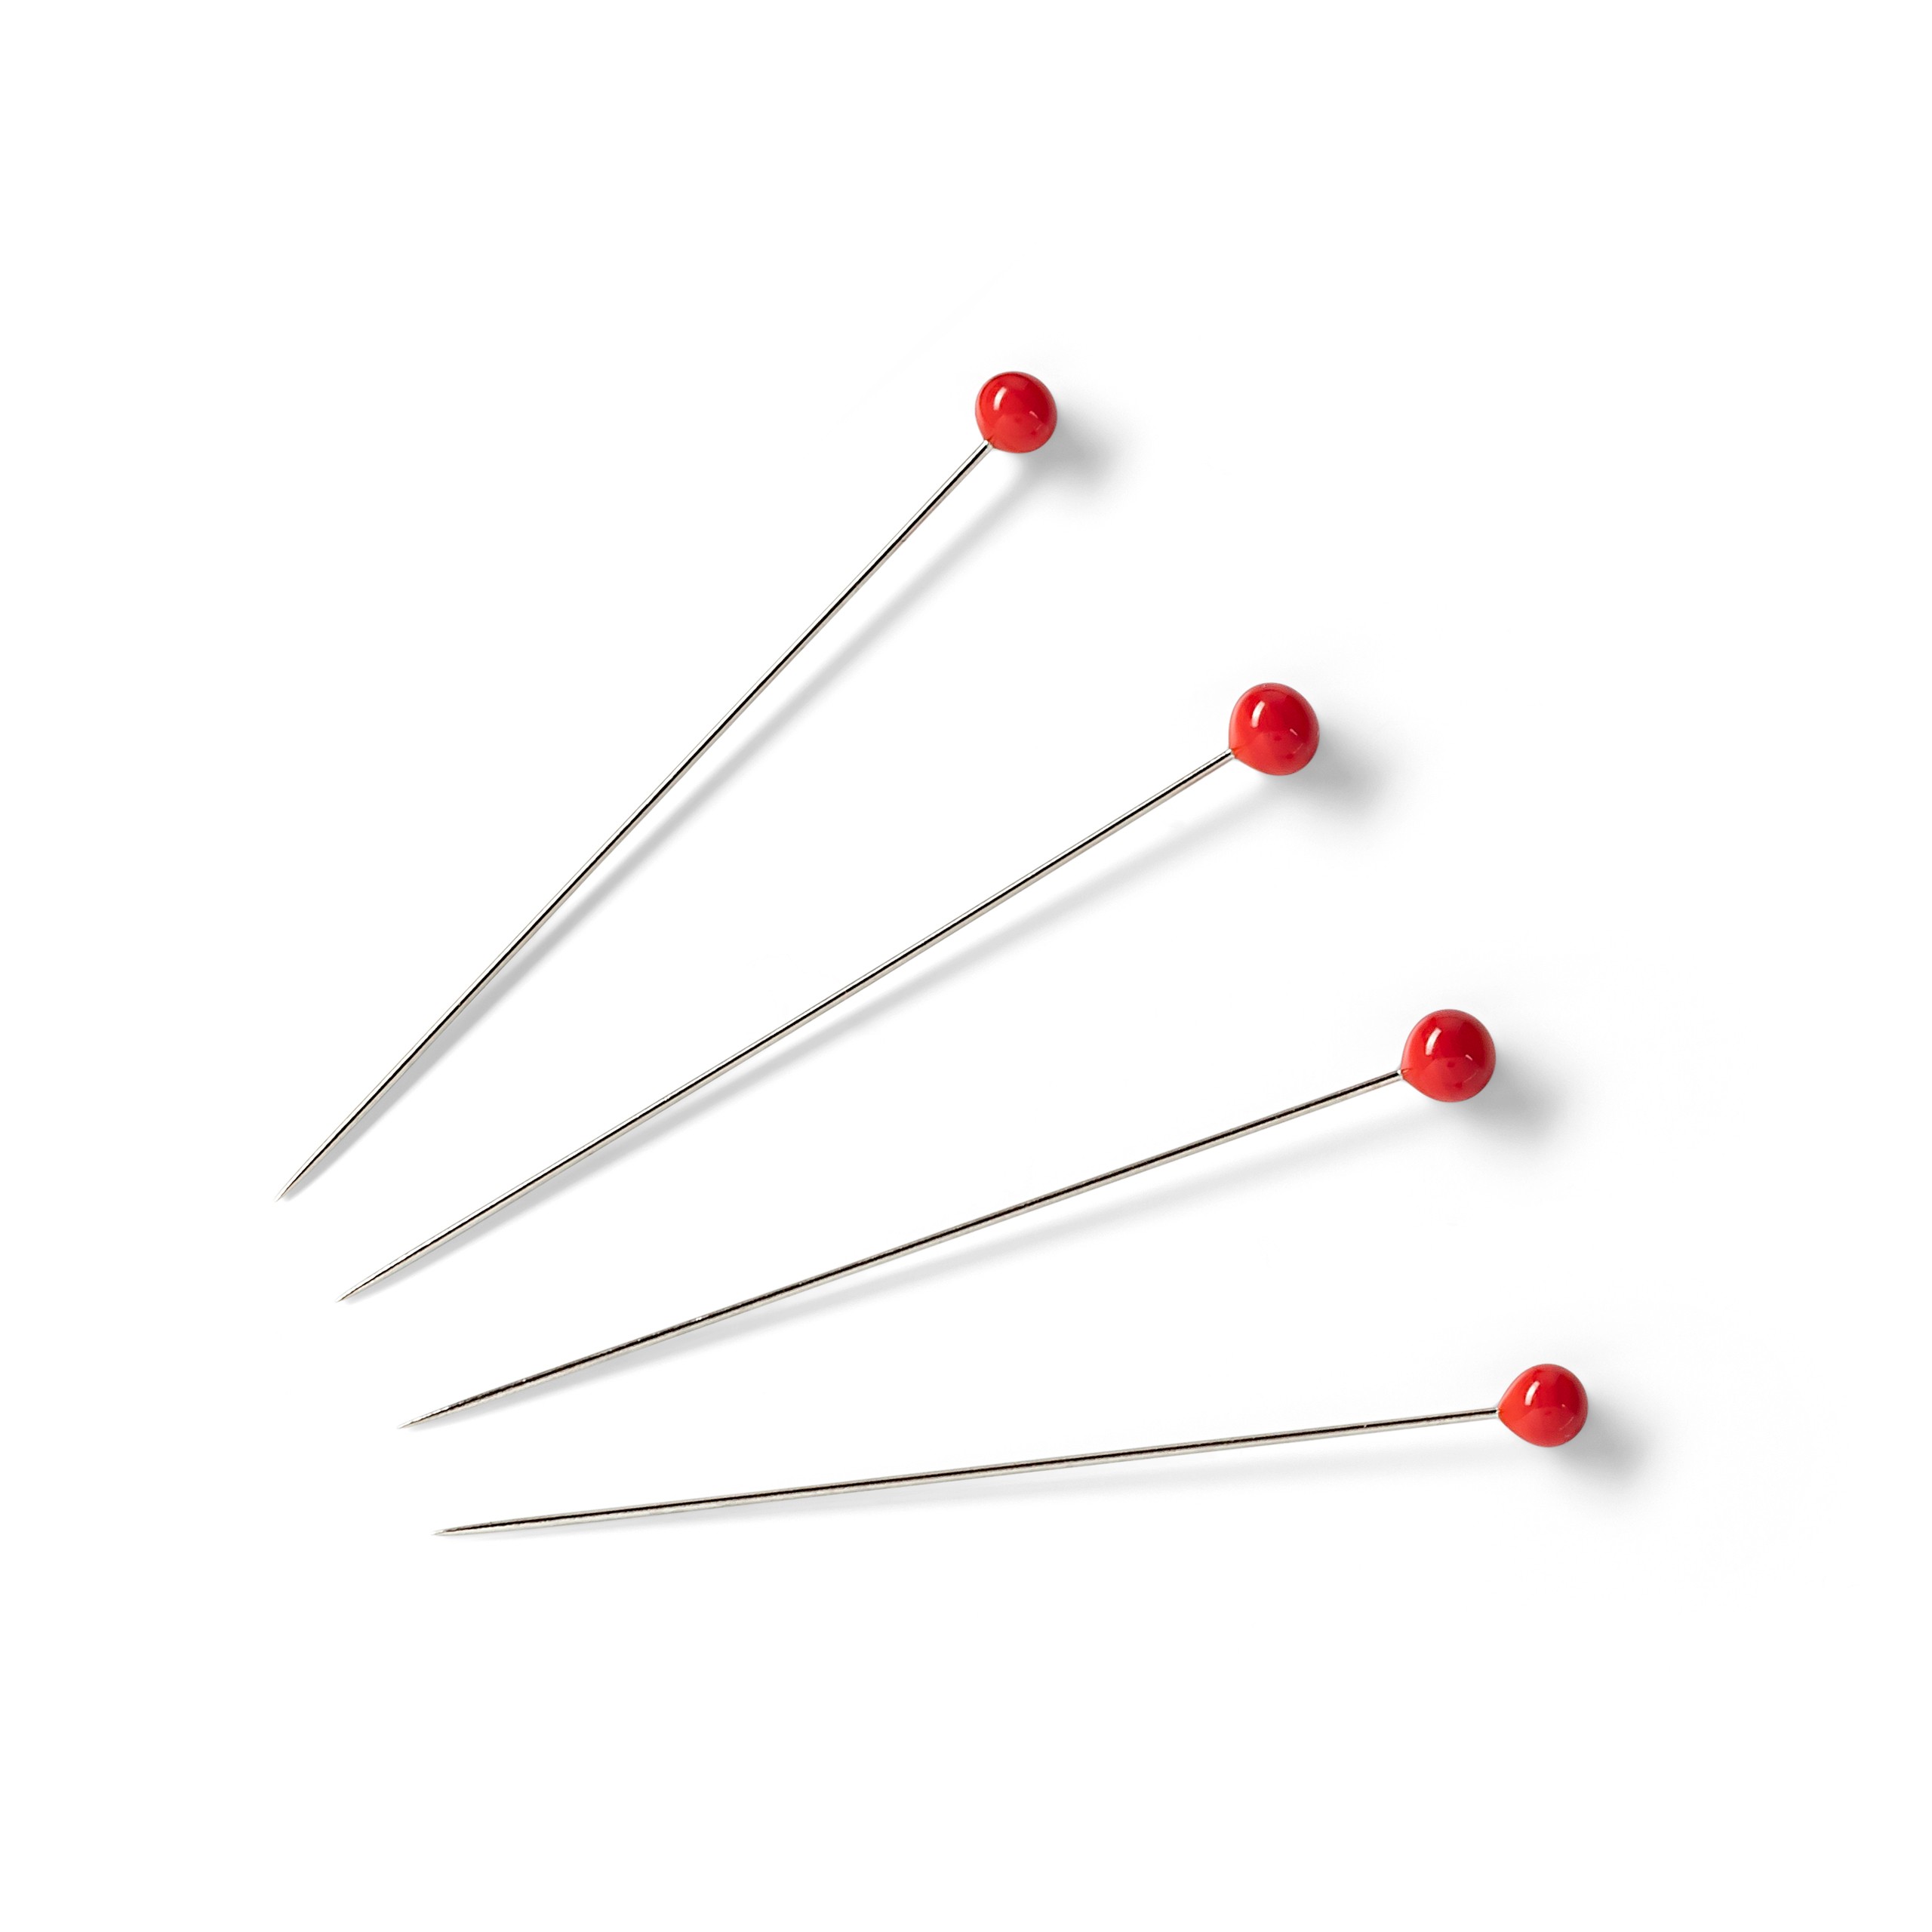 PRYM-Glass-head pins 35x0.40mm si-co red 5g > Pins > Barnyarns Ripon LTD